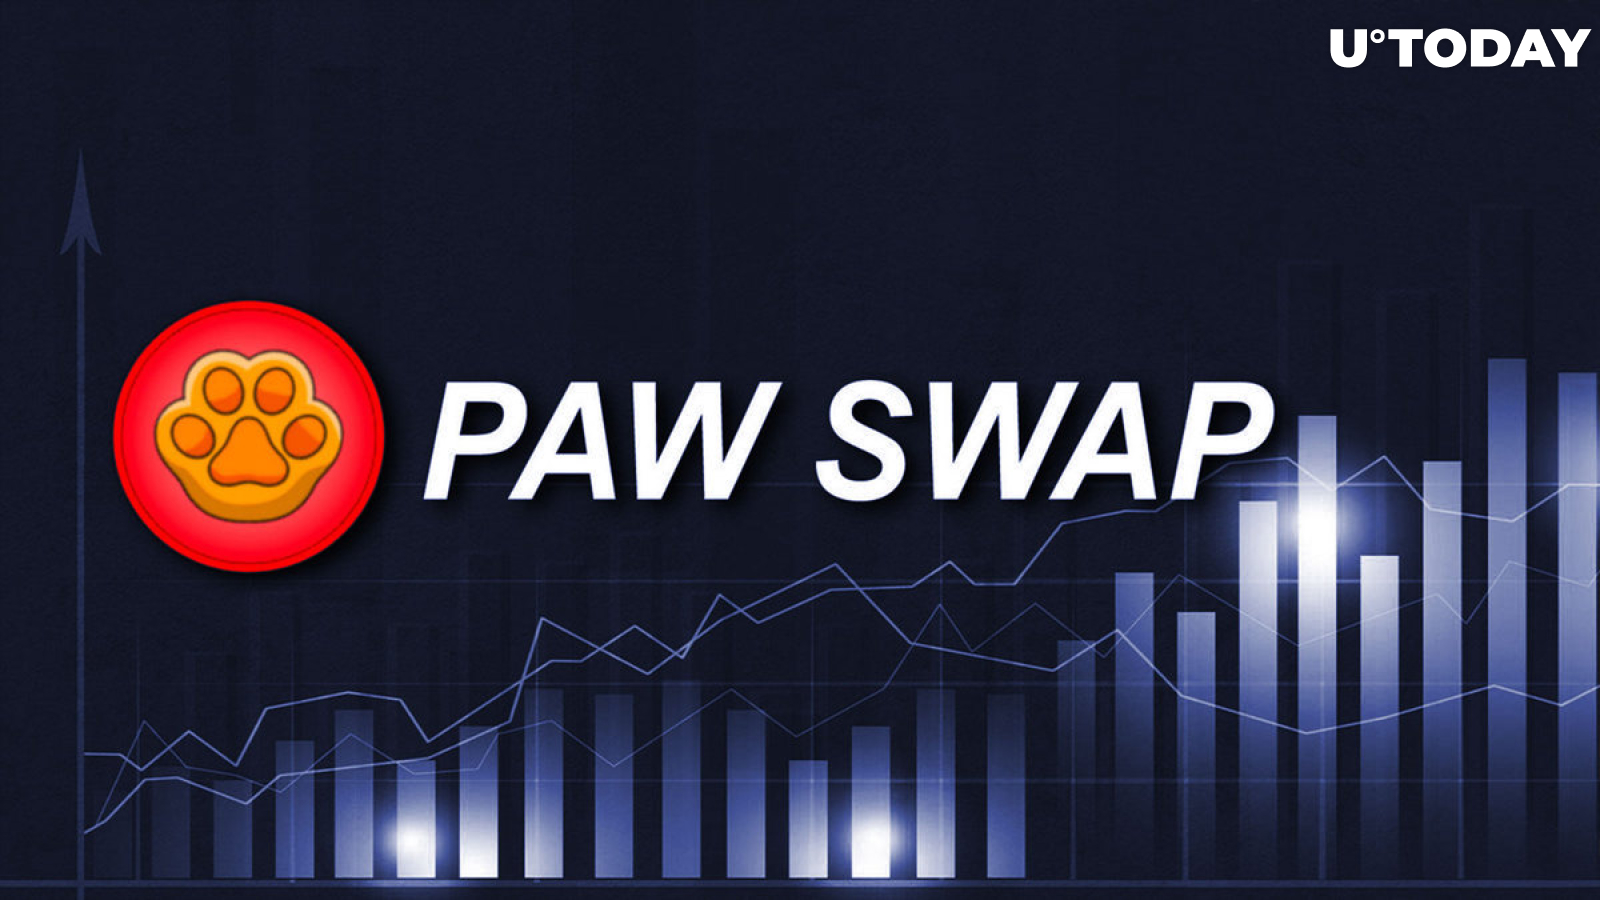 Shibarium-Loving PAW Spikes 44% as News of Upcoming PawSwap Burns Announced